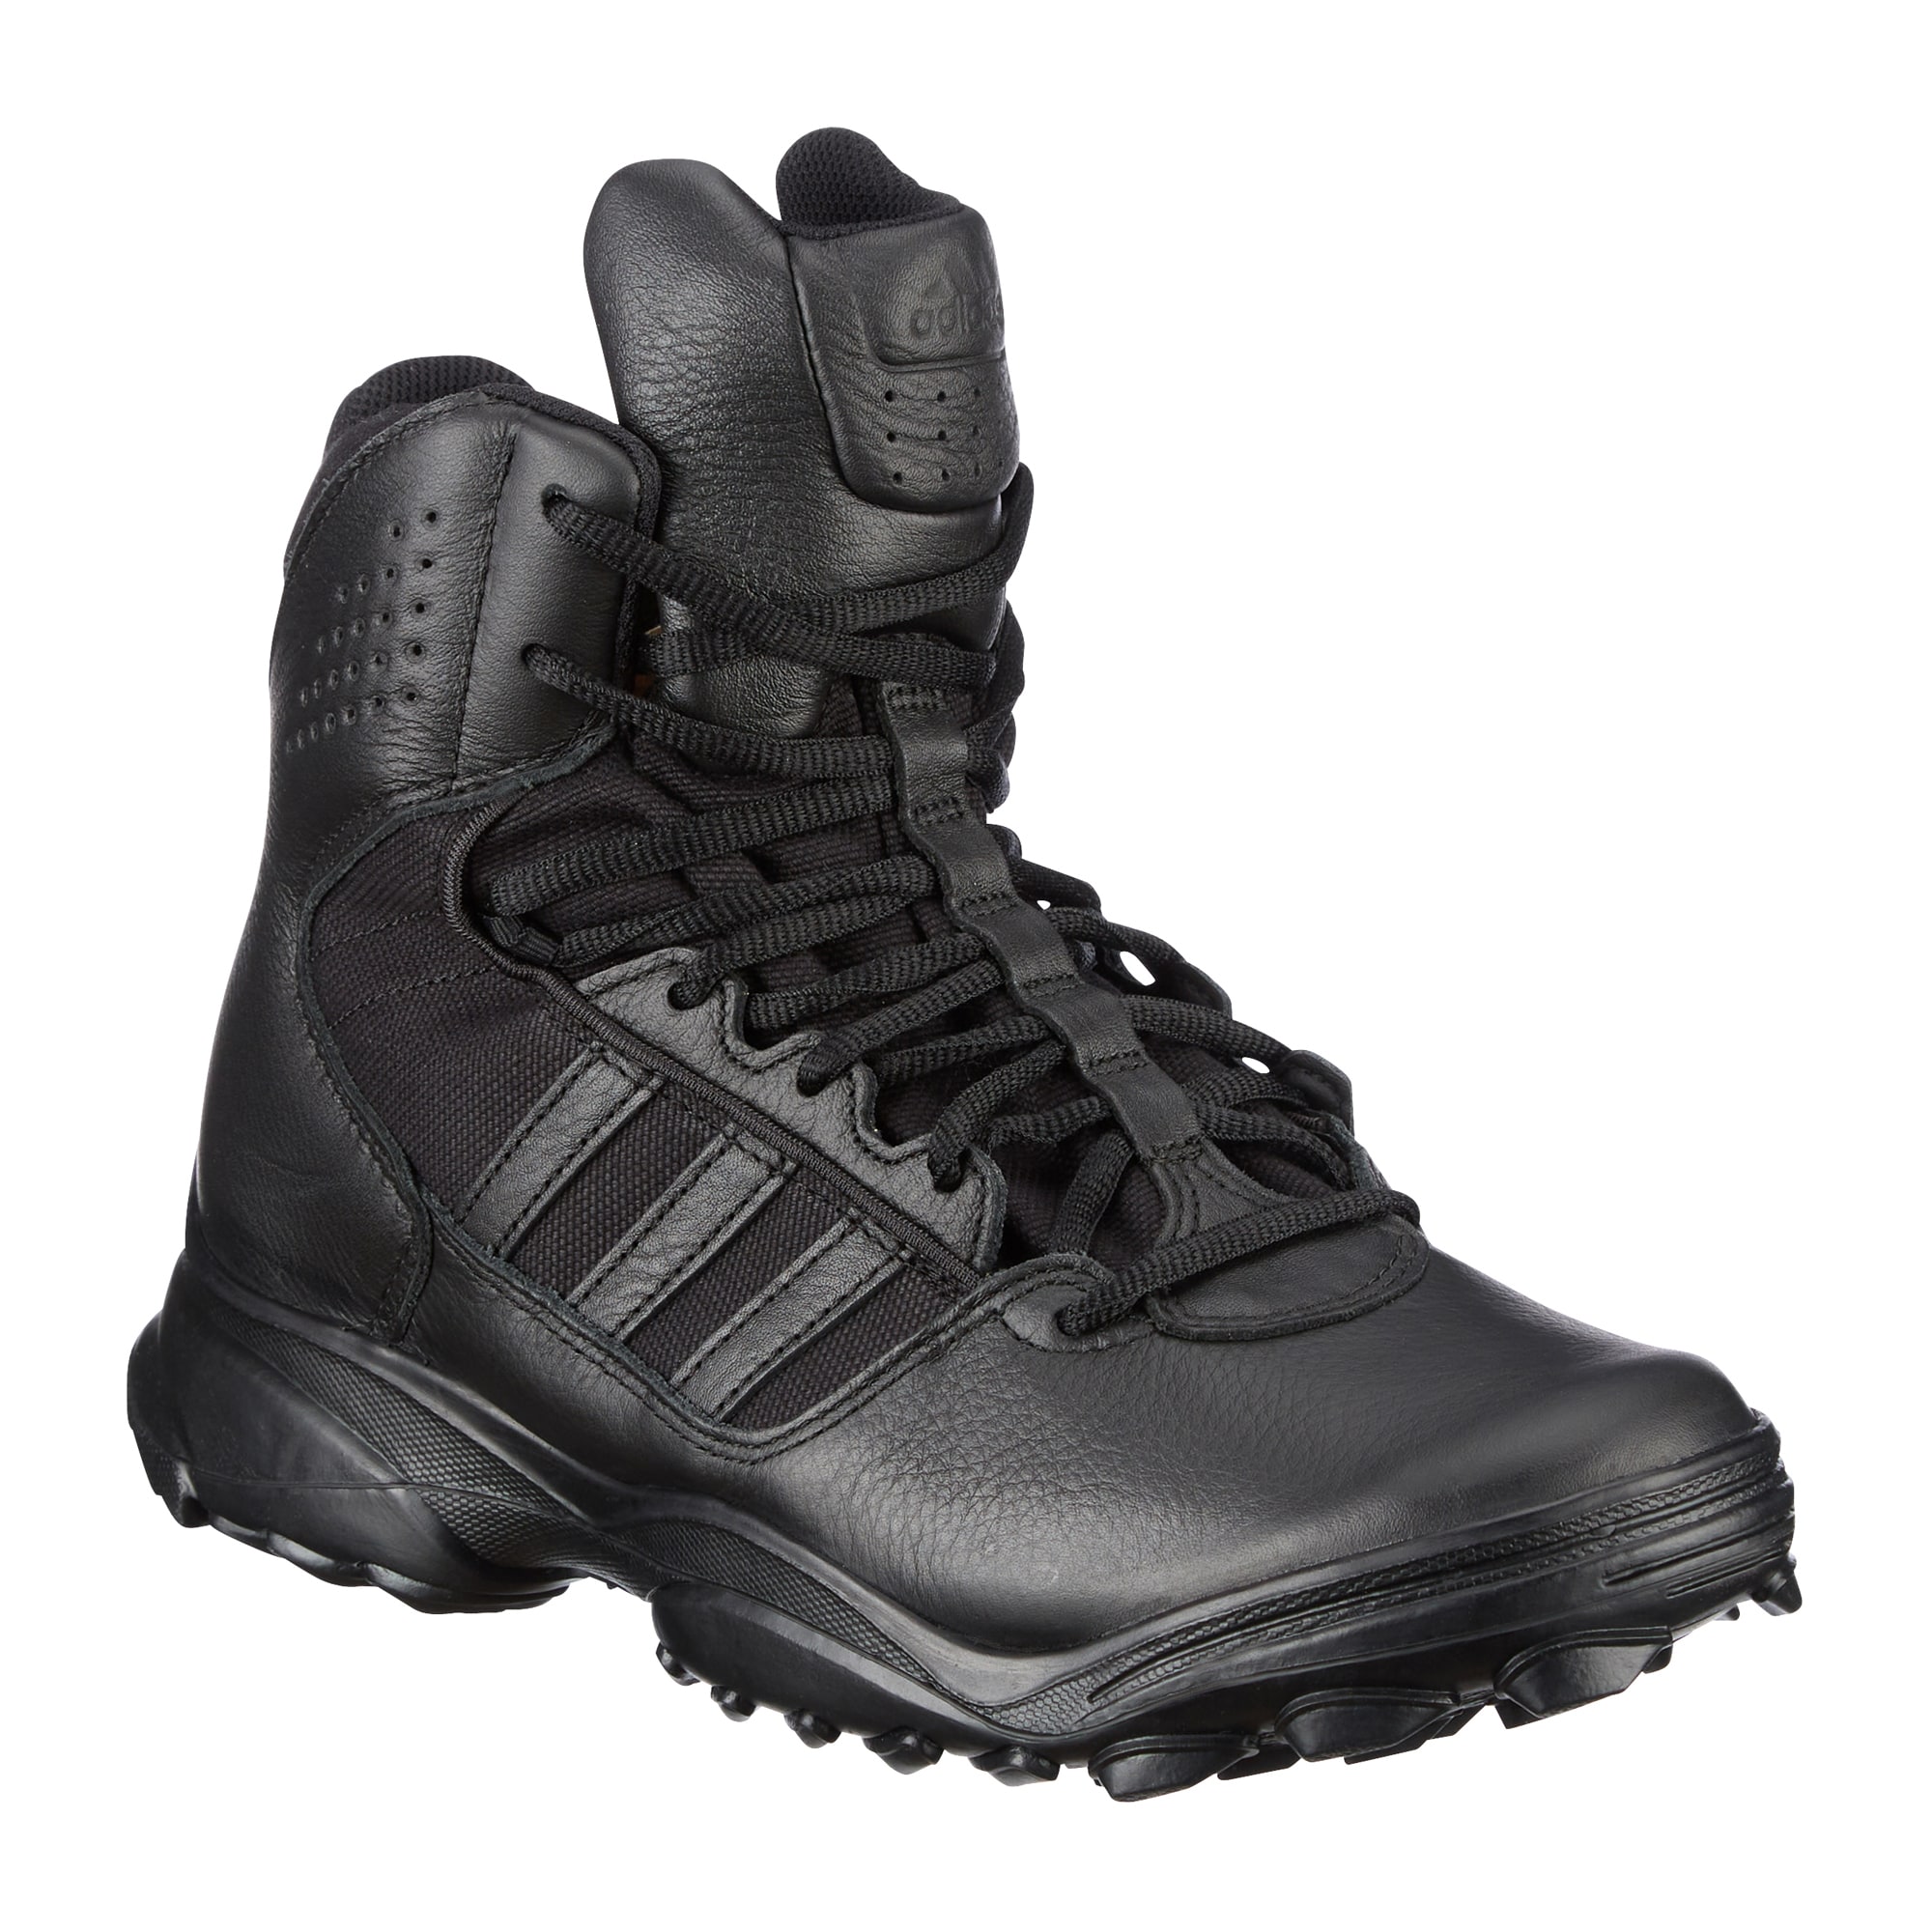 adidas gsg tactical boots